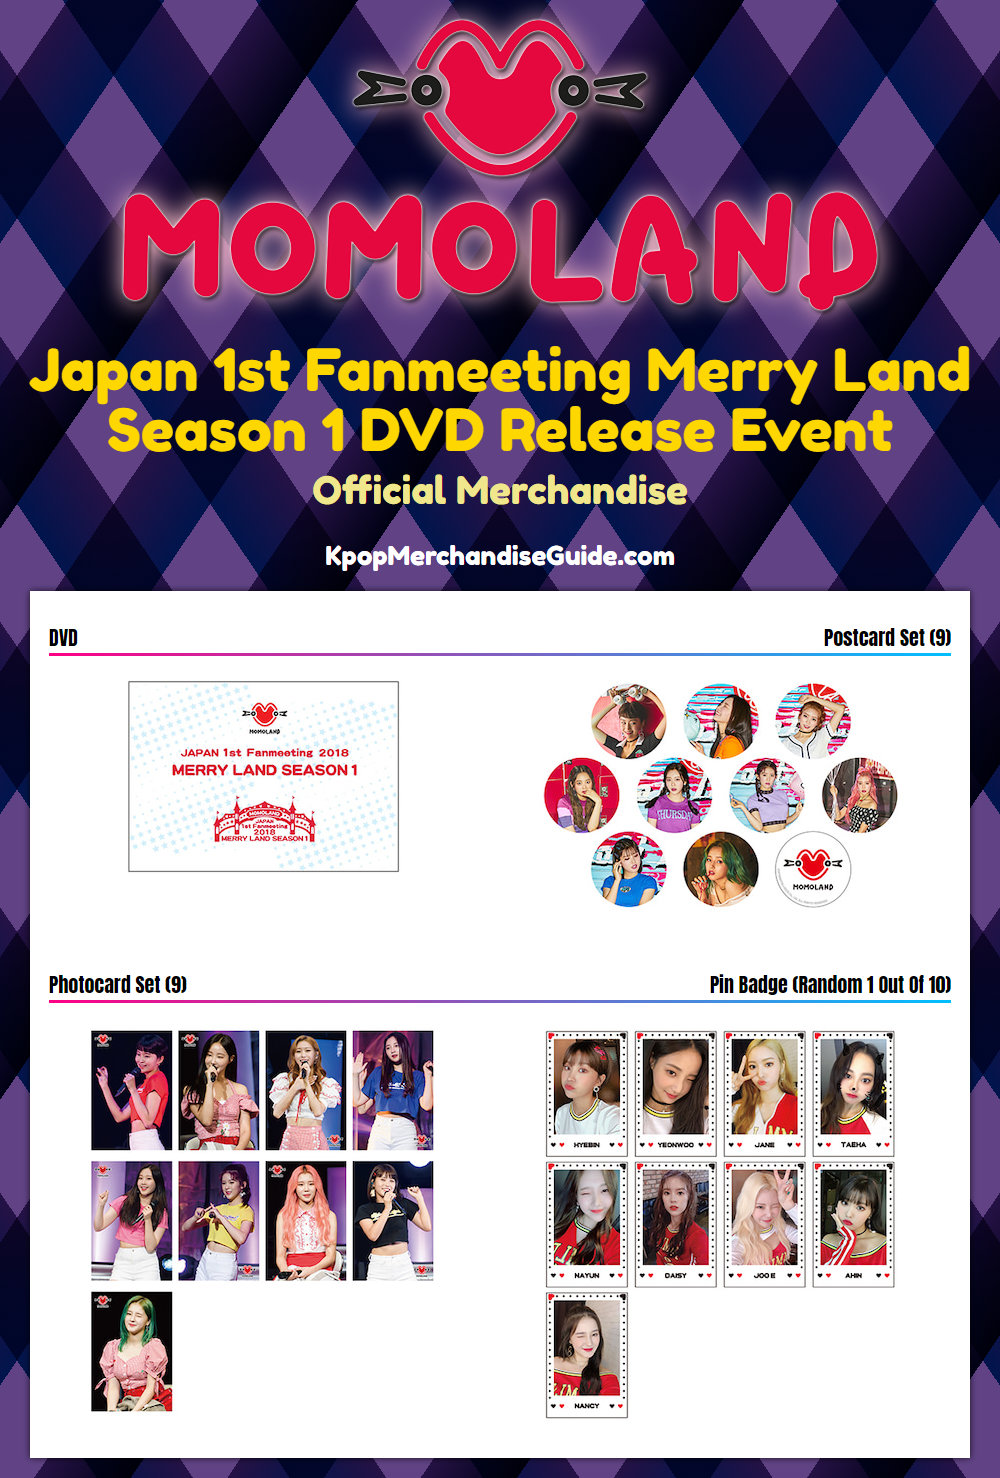 1st Fanmeeting Merry Land Season 1 DVD Release Event Merchandise